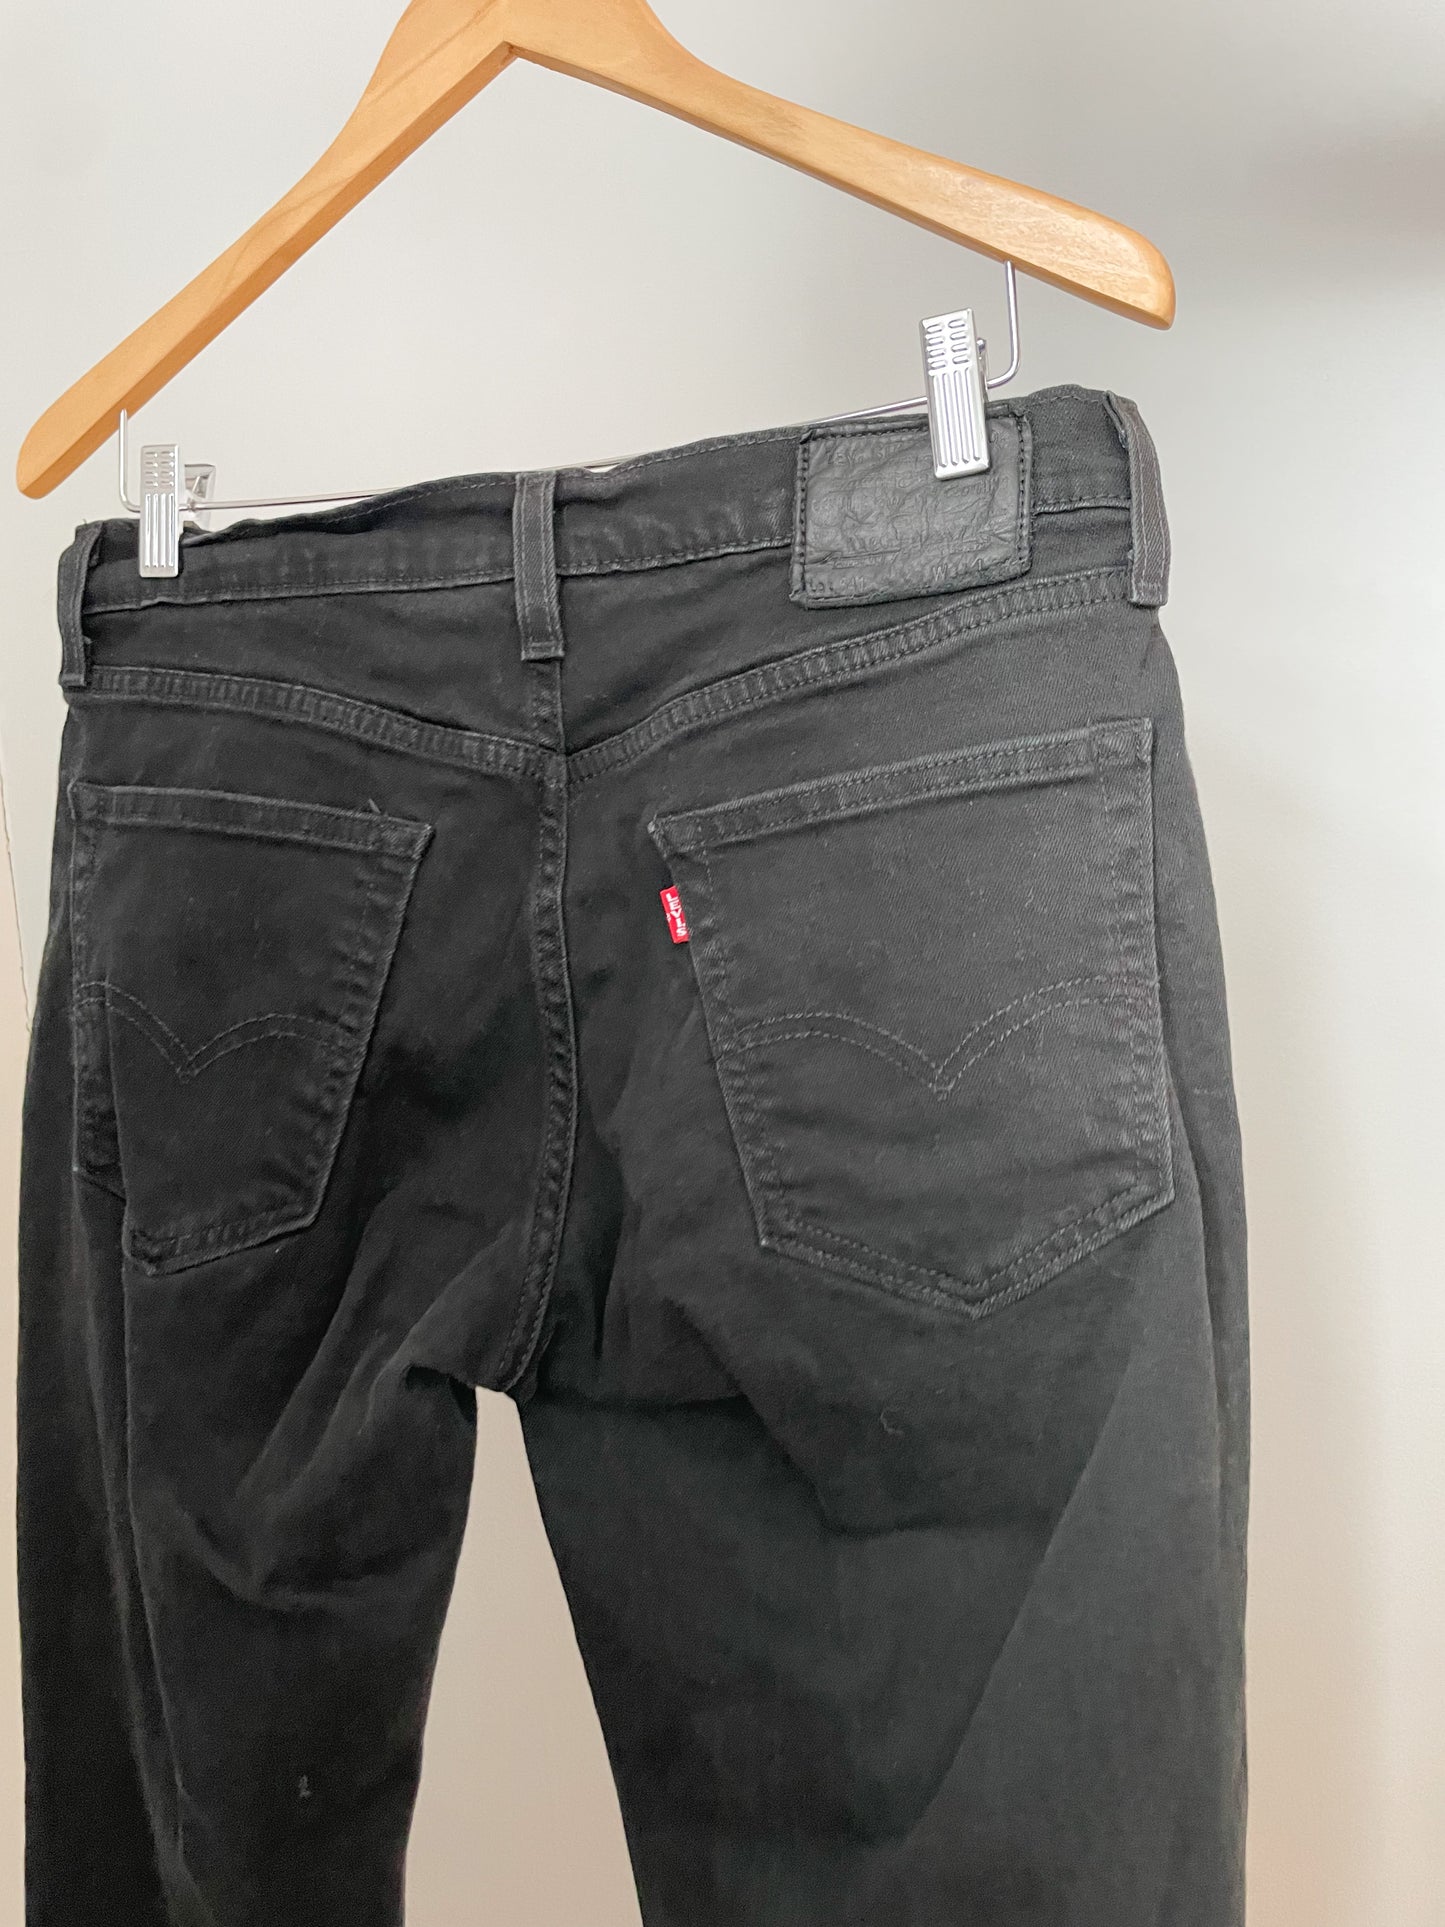 Levi's Black Straight Leg High Rise Jeans - Size W31 L30